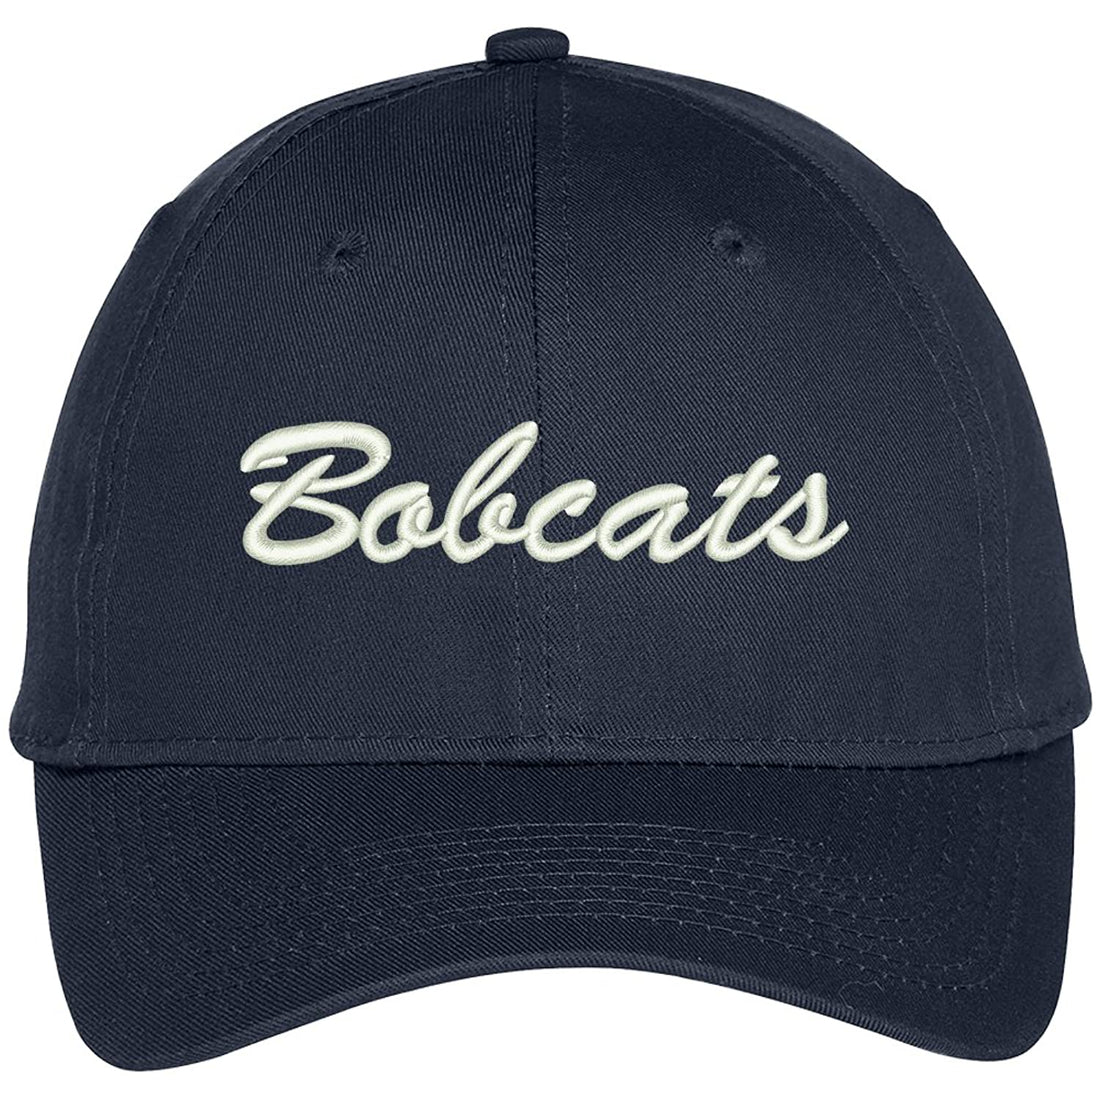 Trendy Apparel Shop Bobcats Embroidered Team Nickname Mascot Cap